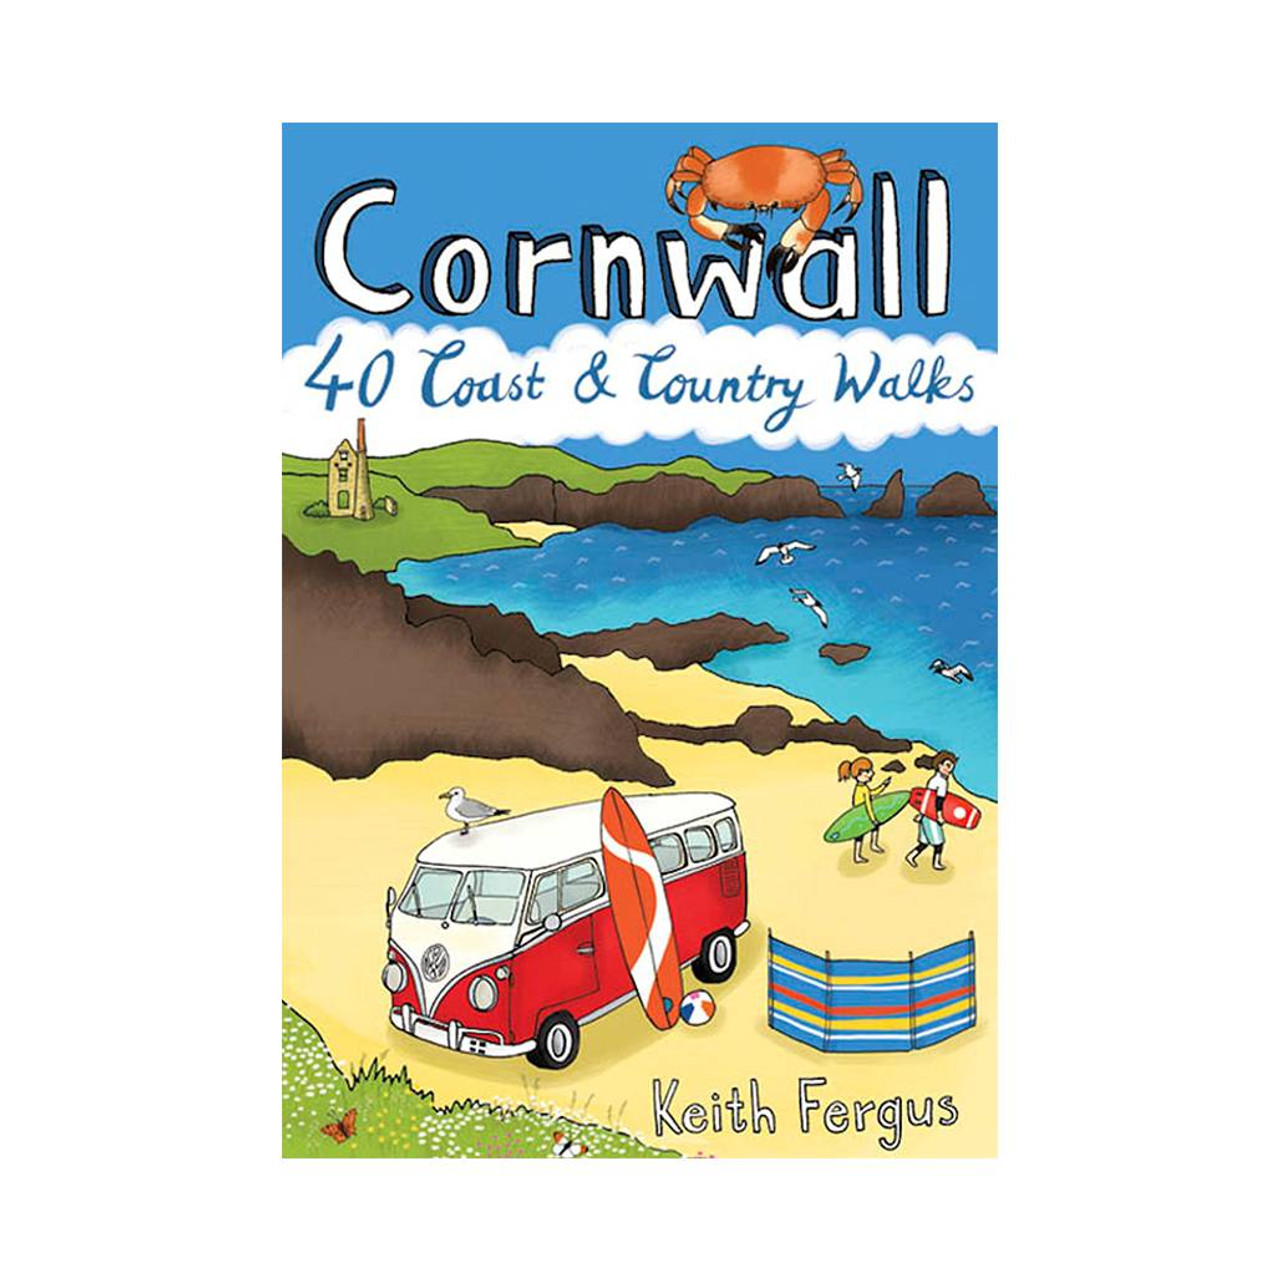 Cornwall: 40 CoastandCountry Walks